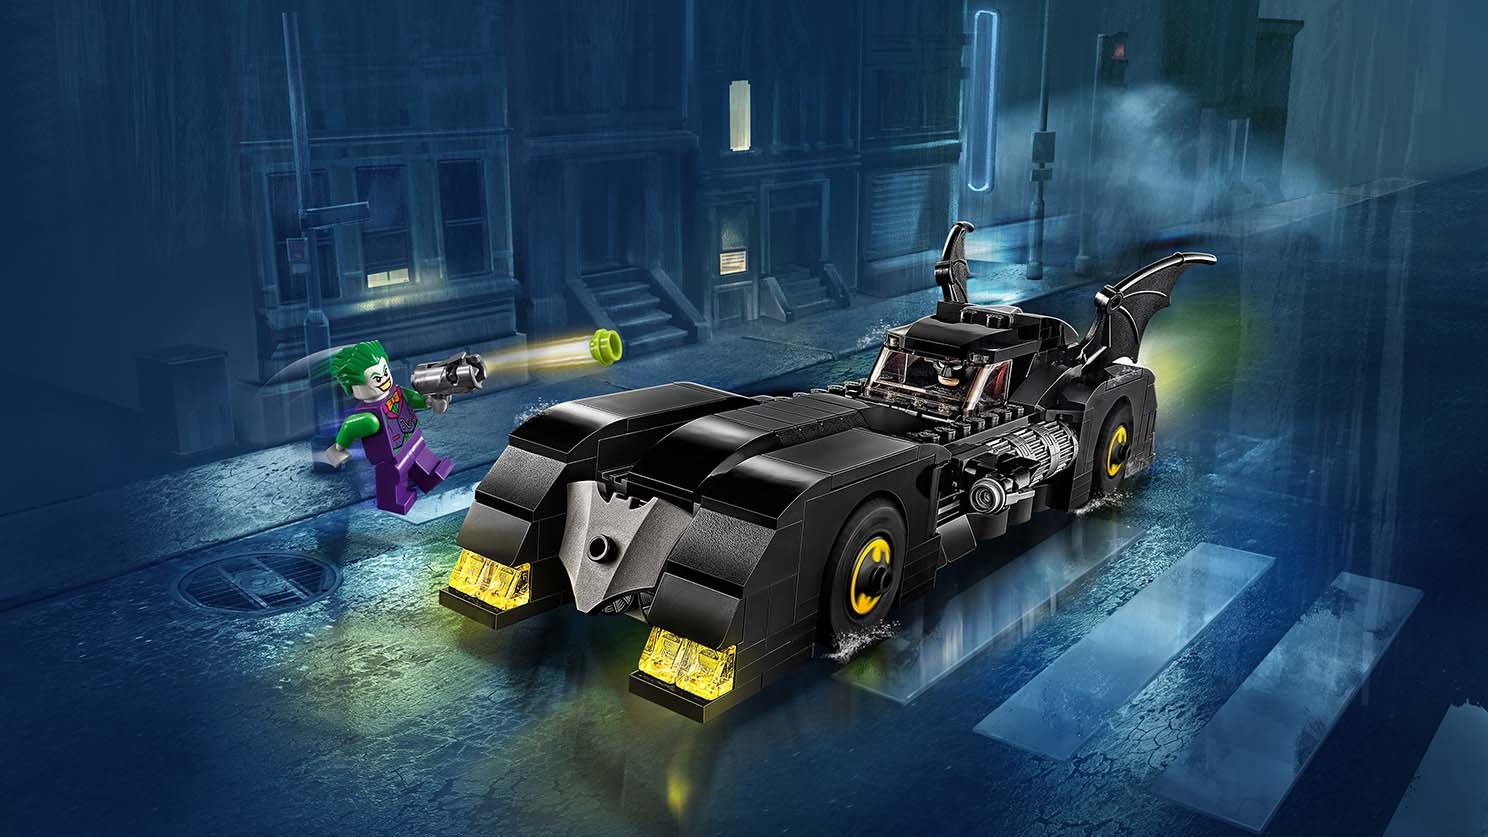 Pursuit of The Joker™ 76119 - LEGO® DC Sets - LEGO.com for kids